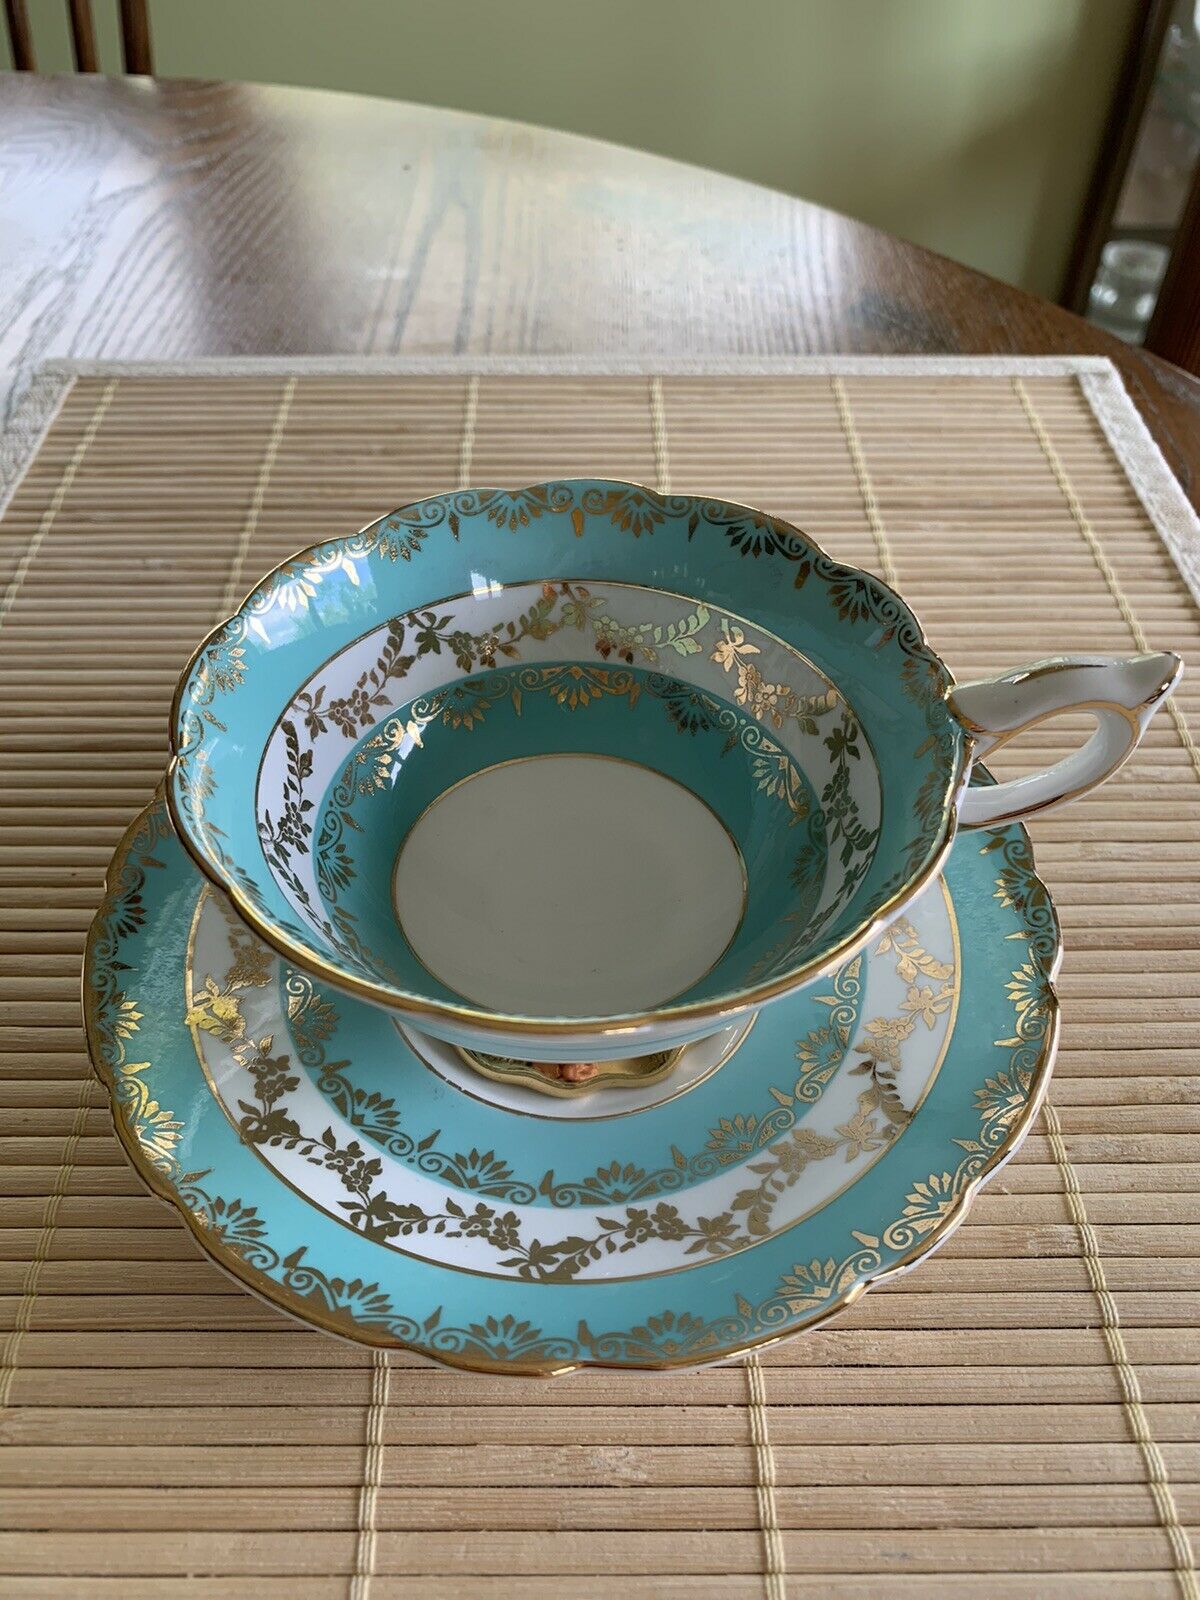 Royal Standard English Bone China Teacup And Saucer Turquois And Gold